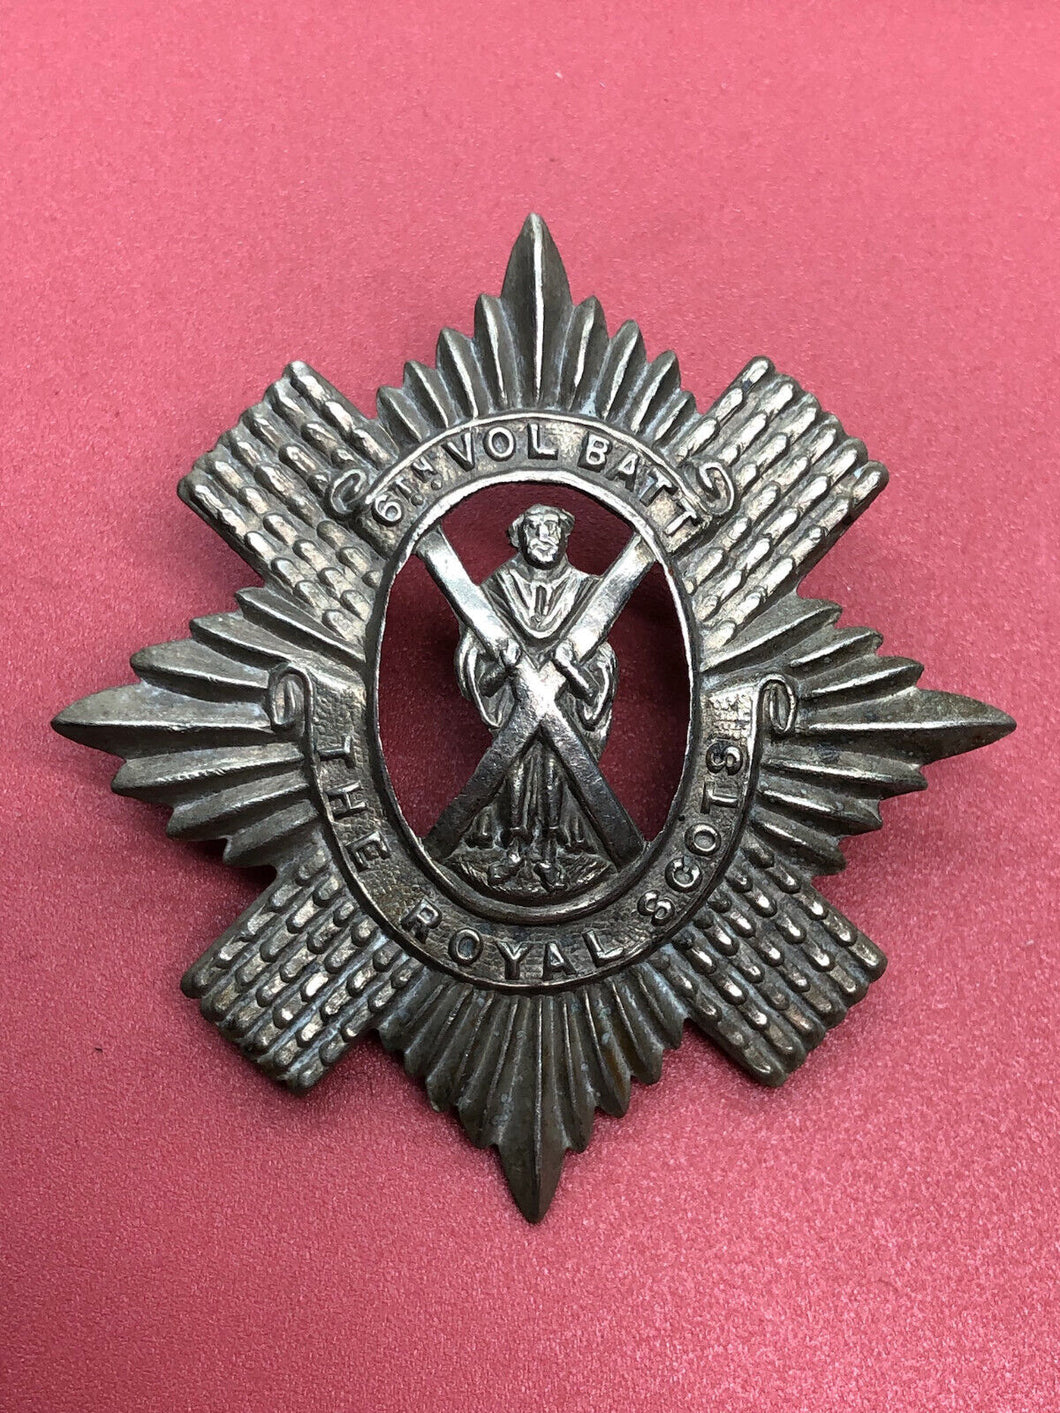 WW1 British Army Cap Badge - 6th Volunteer Batallion Royal Scots